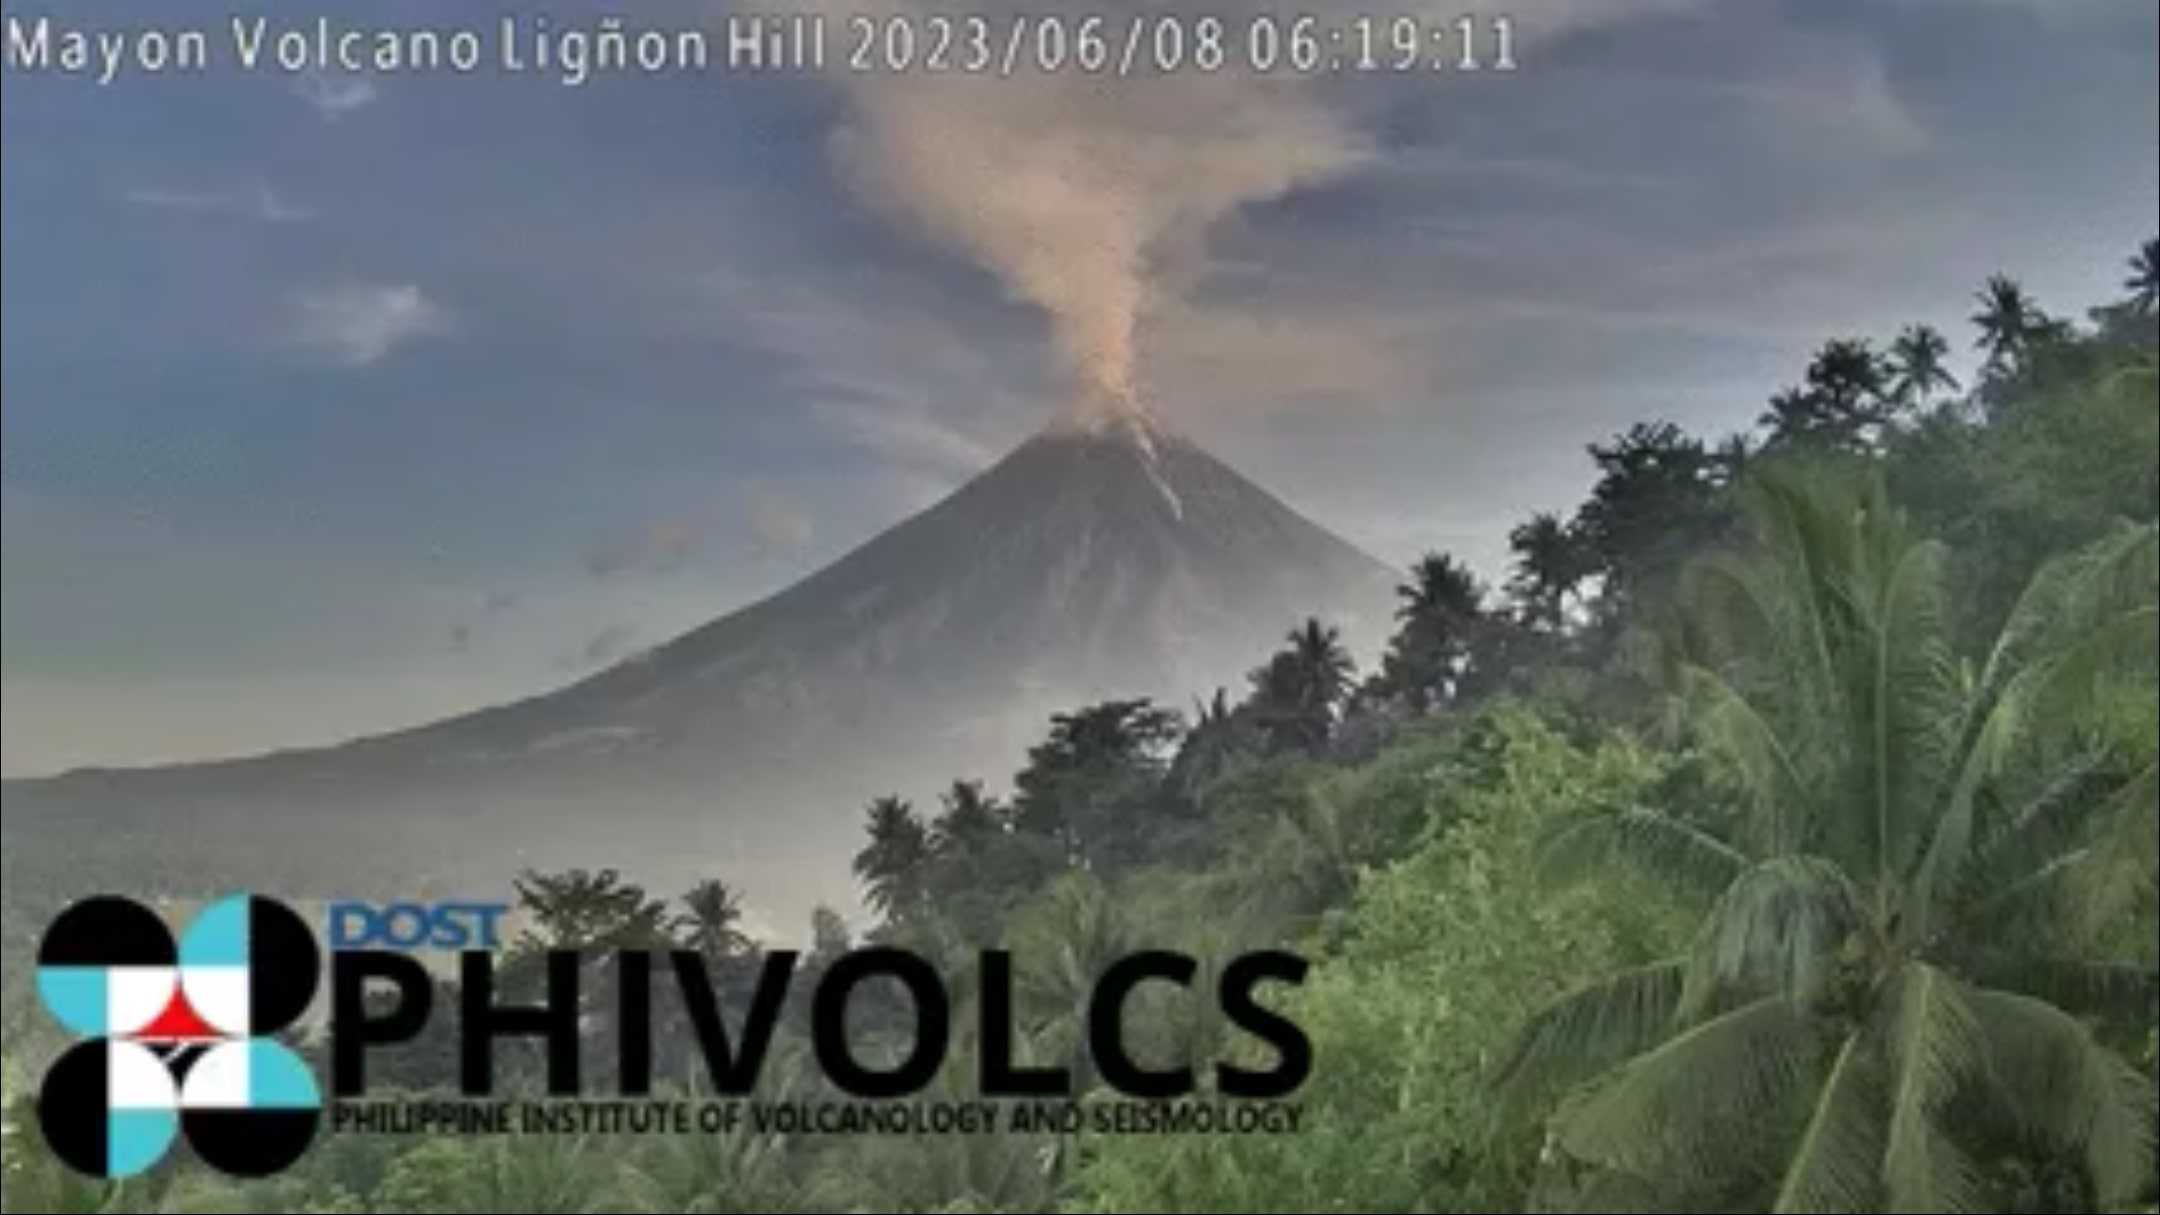 Phivolcs continues to observe rockfalls, longer lava flow in Mayon Volcano